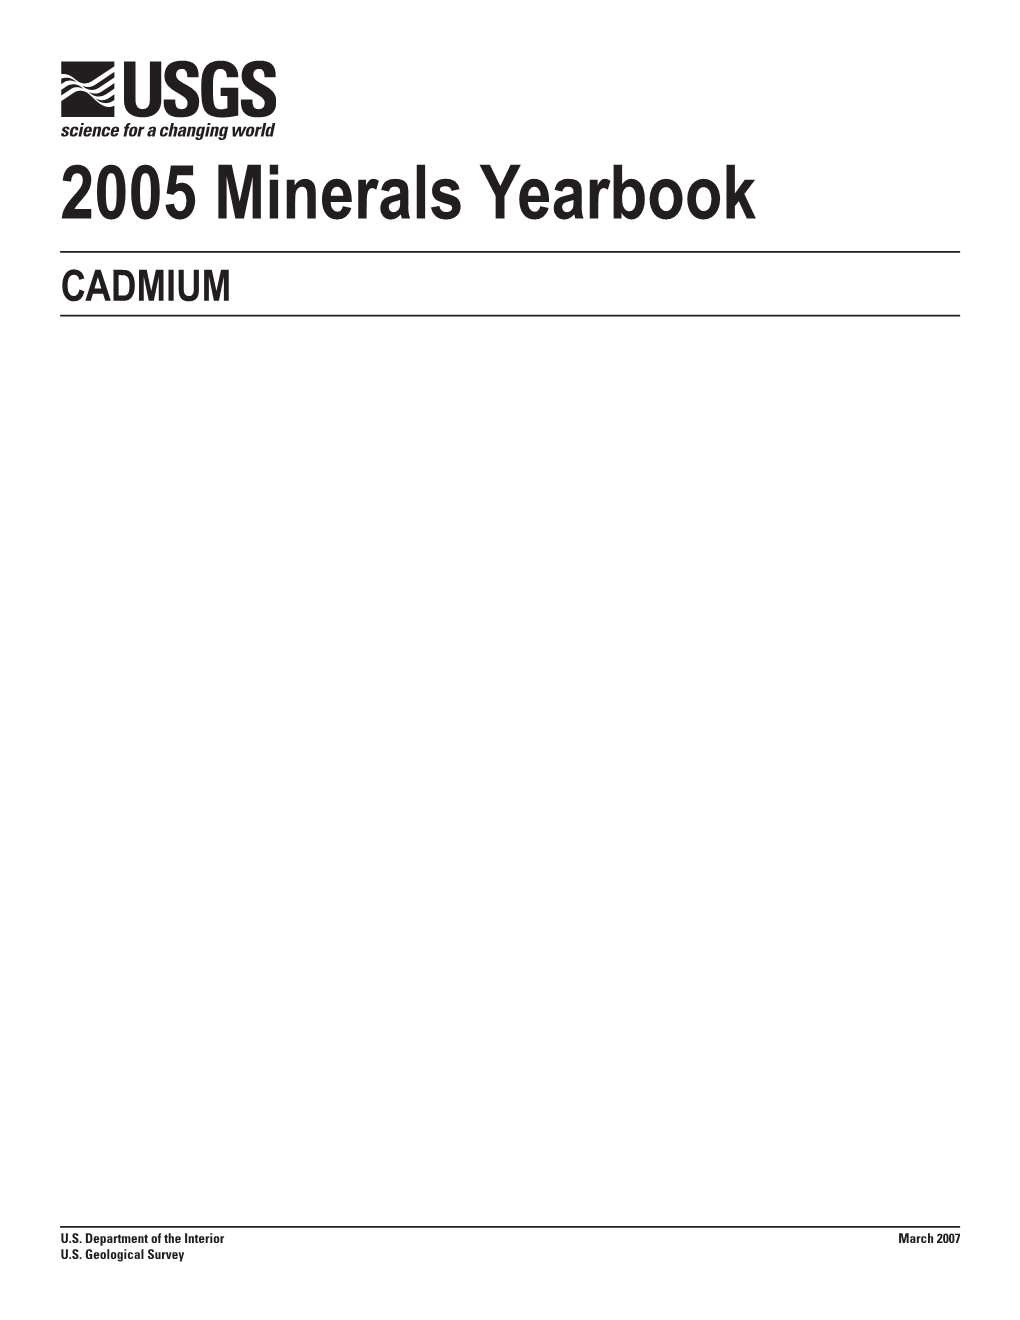 2005 Minerals Yearbook Cadmium